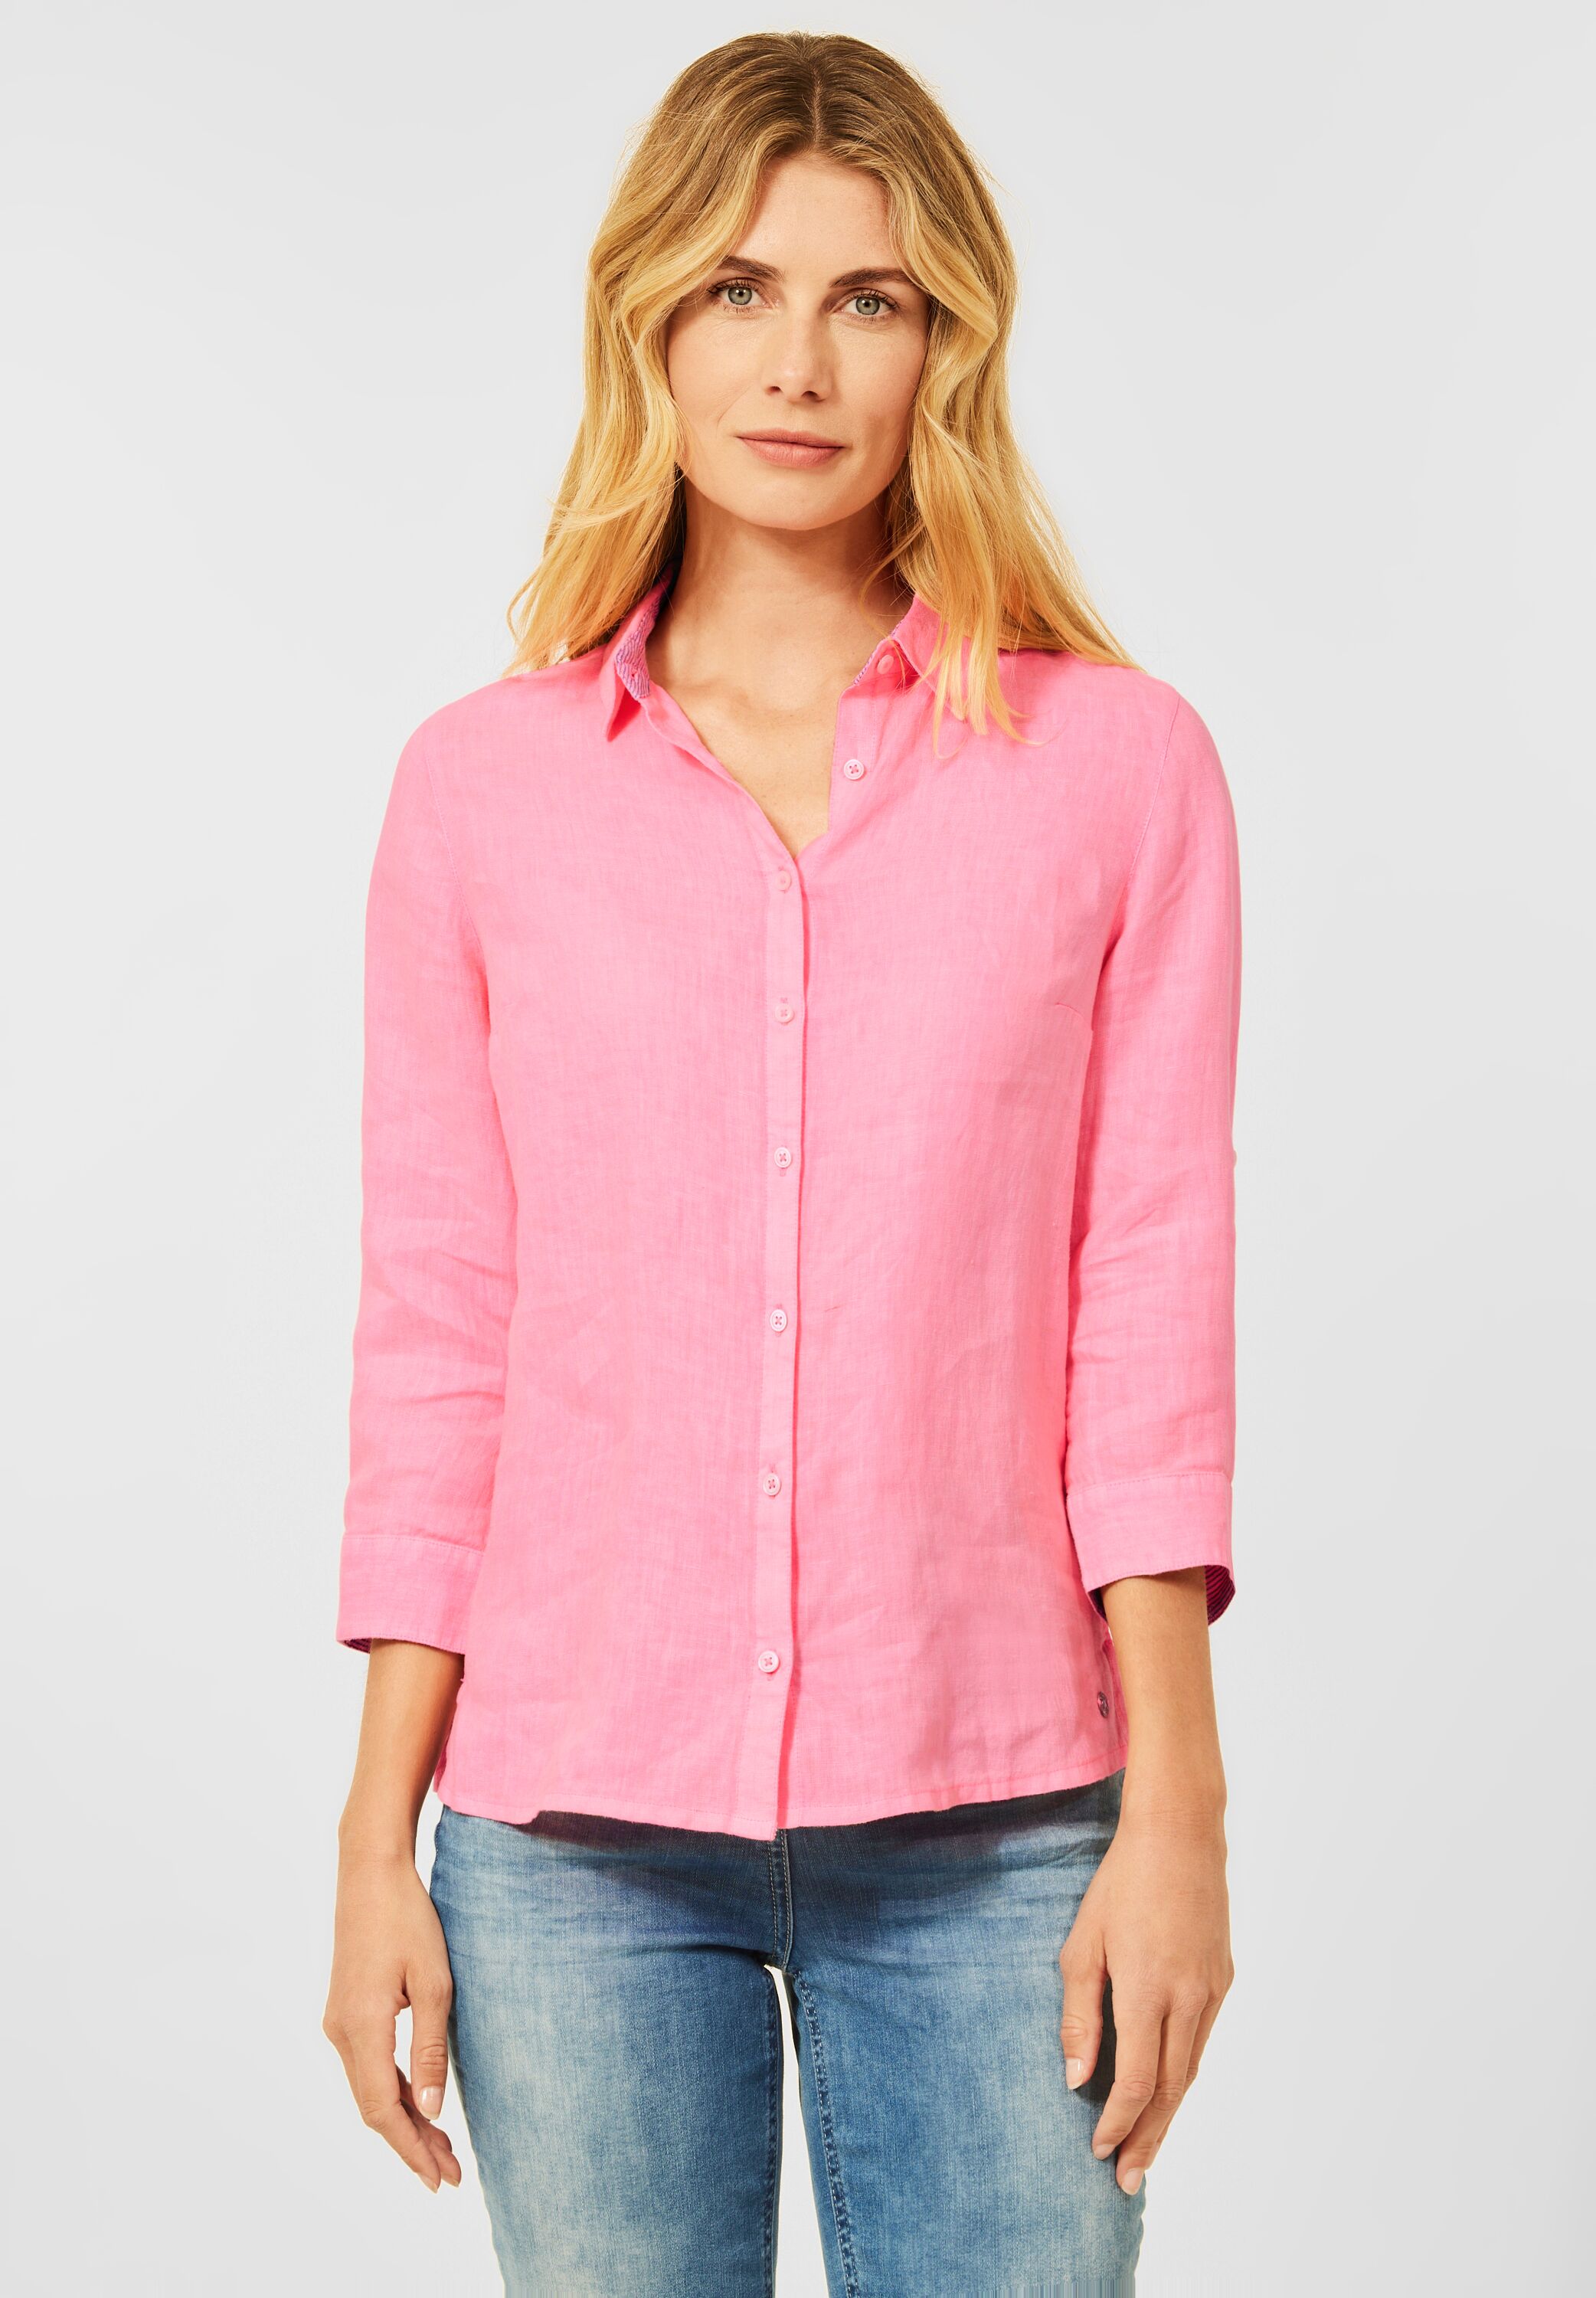 CECIL Bluse in Soft Neon Pink im SALE reduziert B343054-12735 - CONCEPT Mode